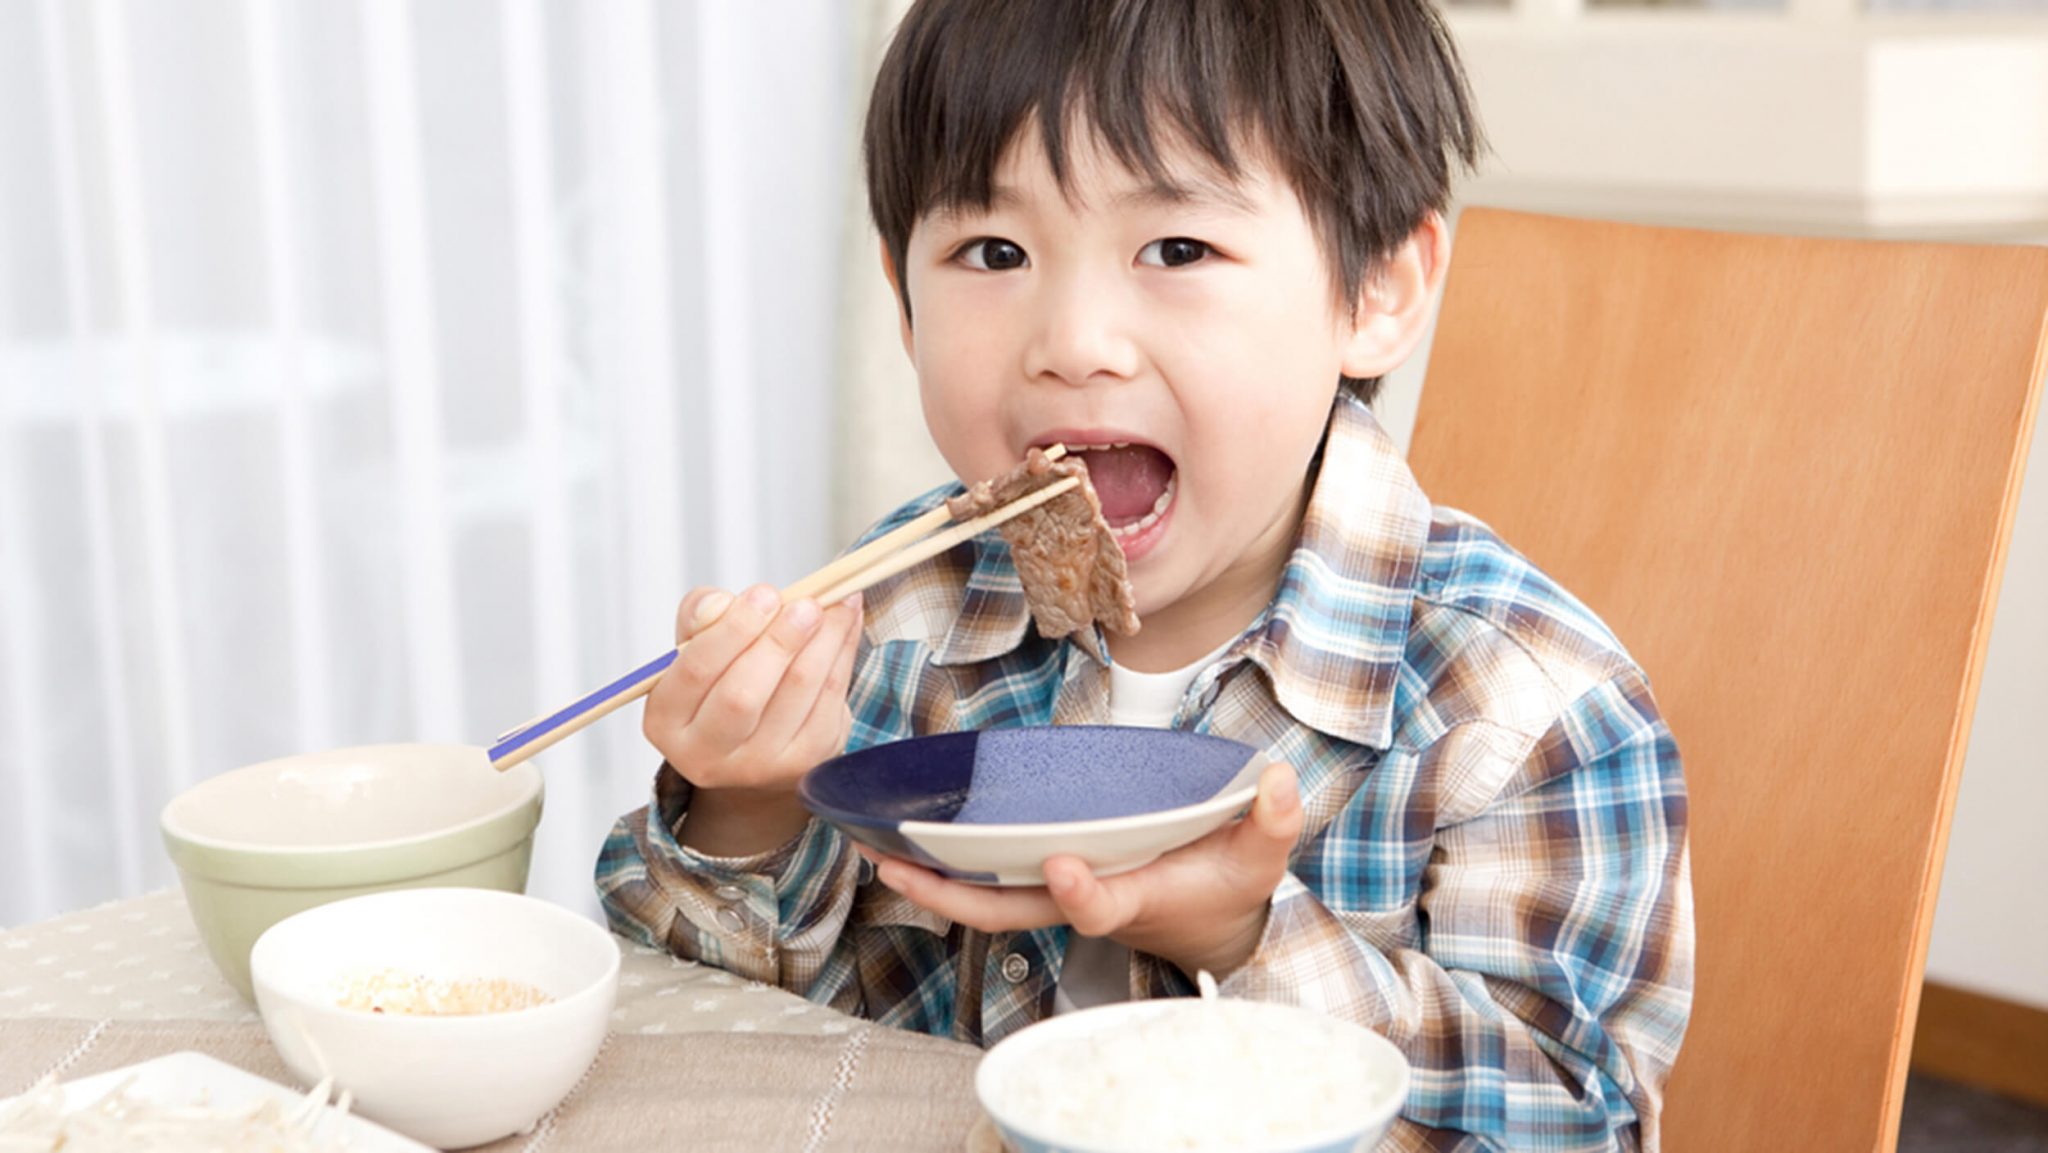 Breaking bad eating habits on children